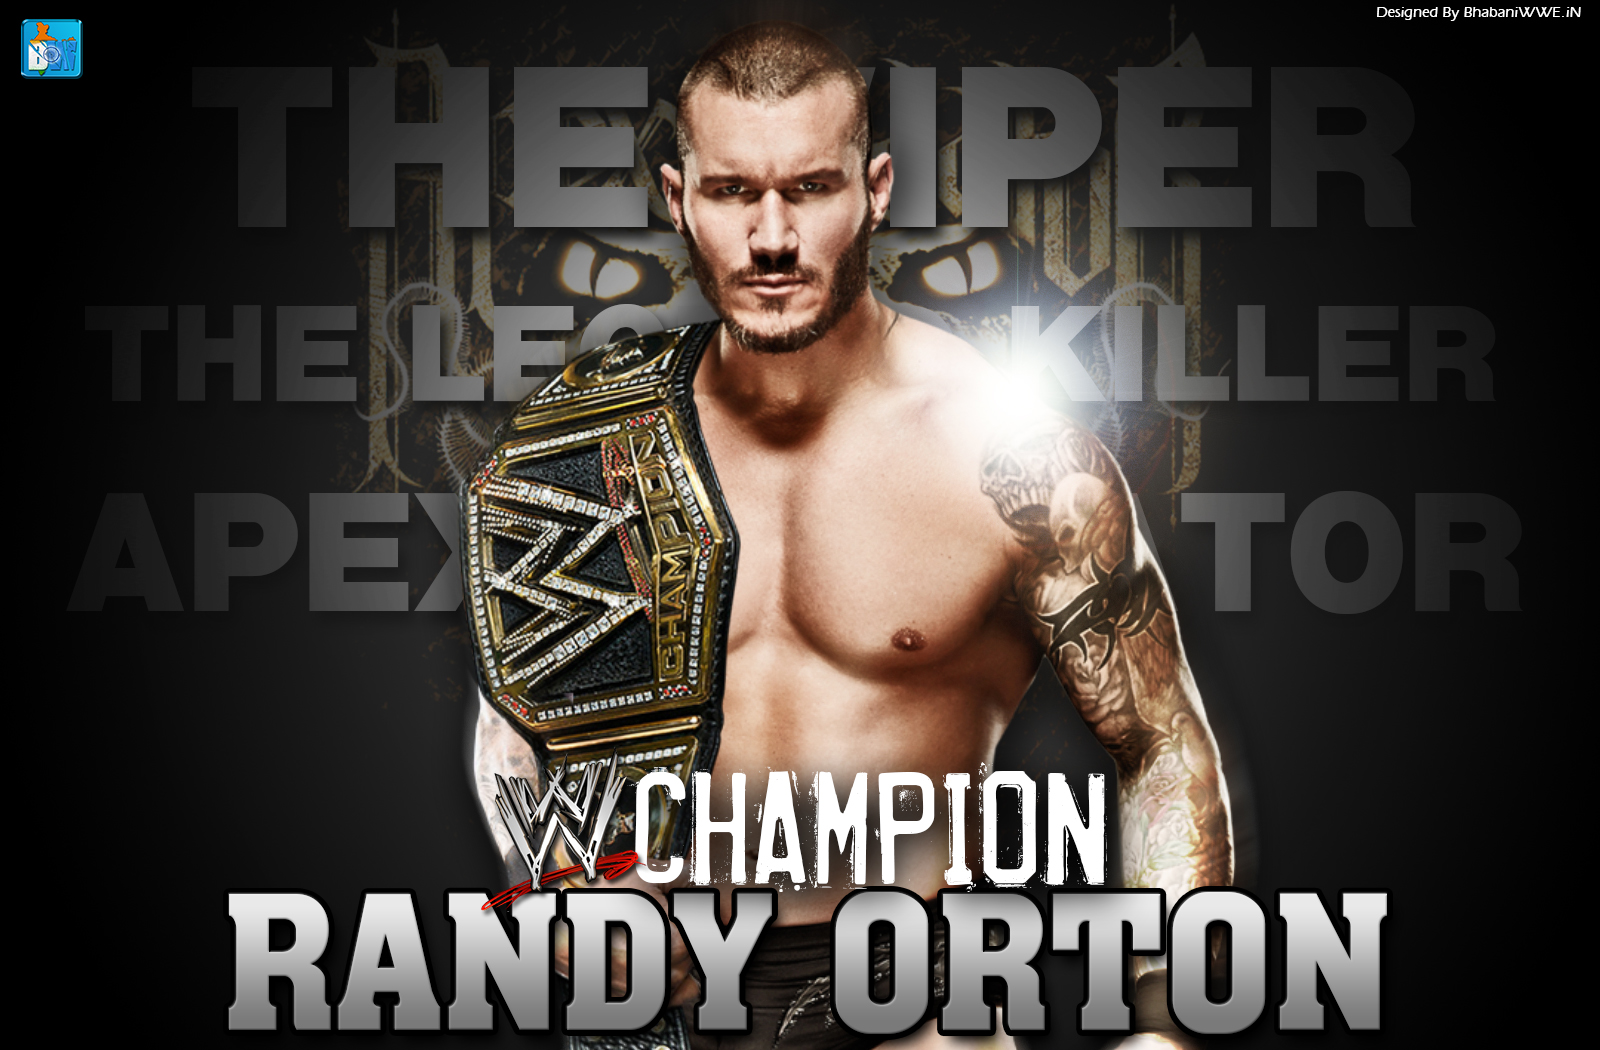 Champion The Viper Randy Orton Hq Wallpaper Designed By Bhabani